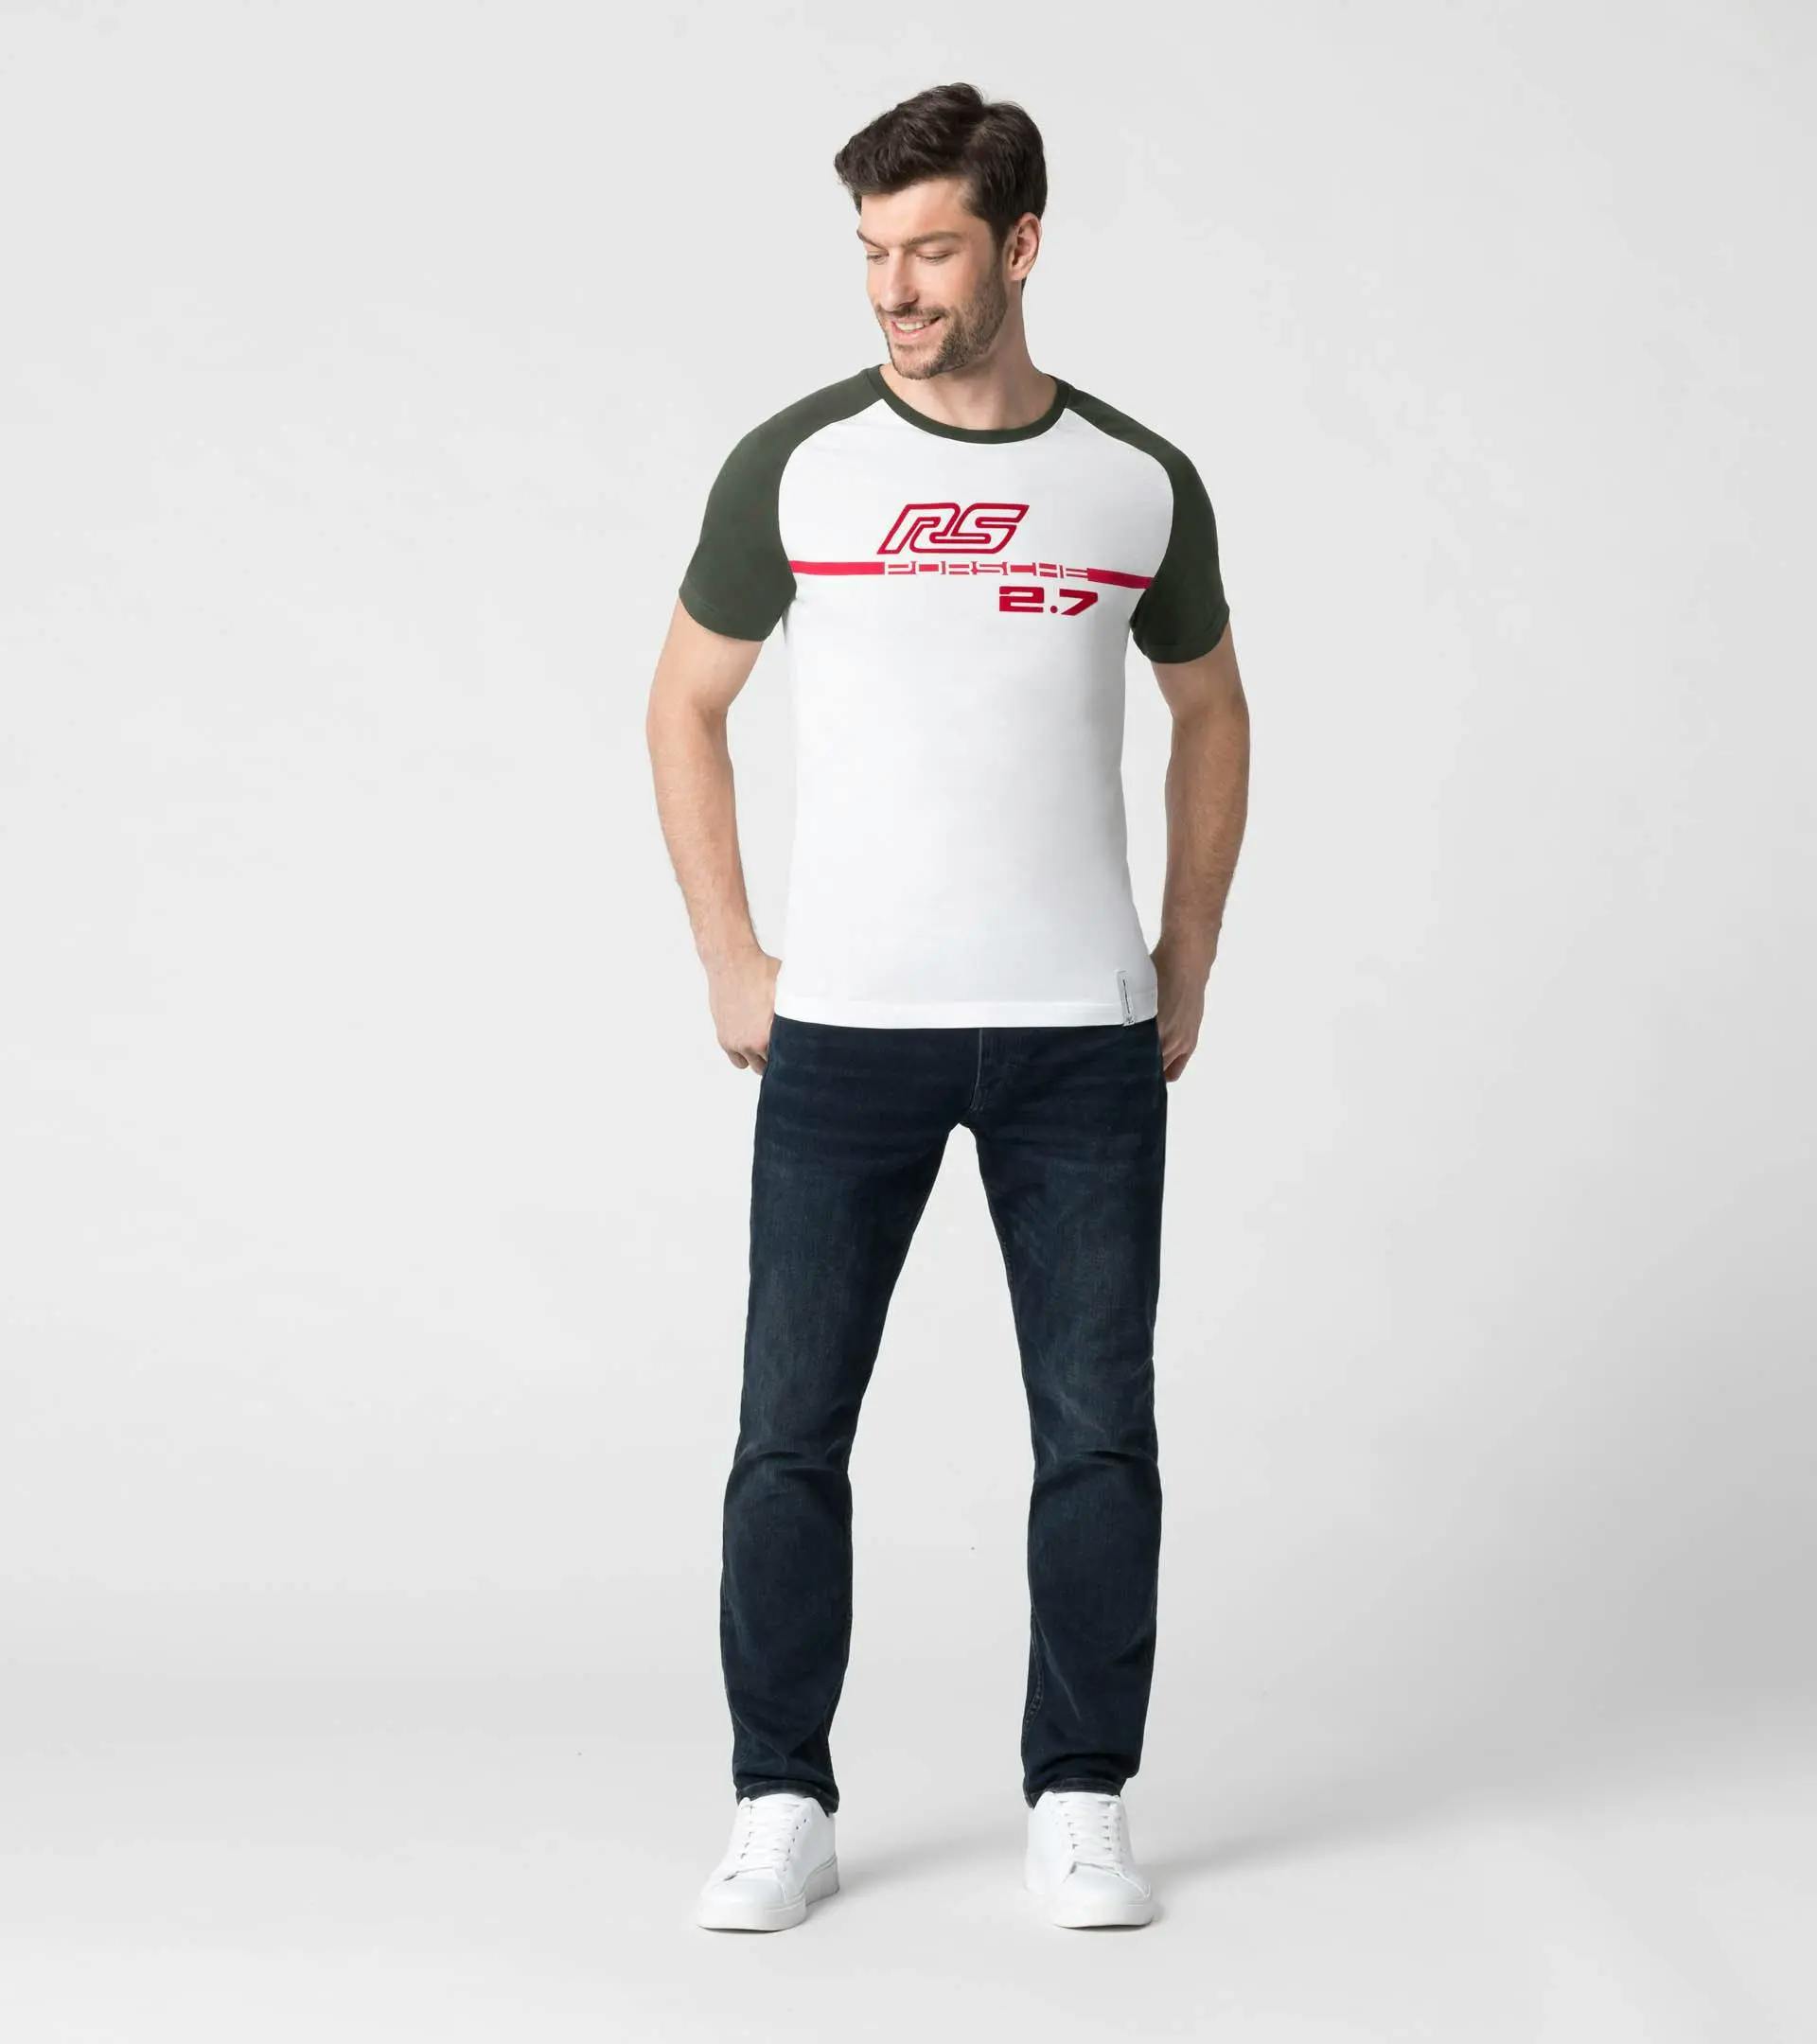 Men's T-shirt – RS 2.7 8